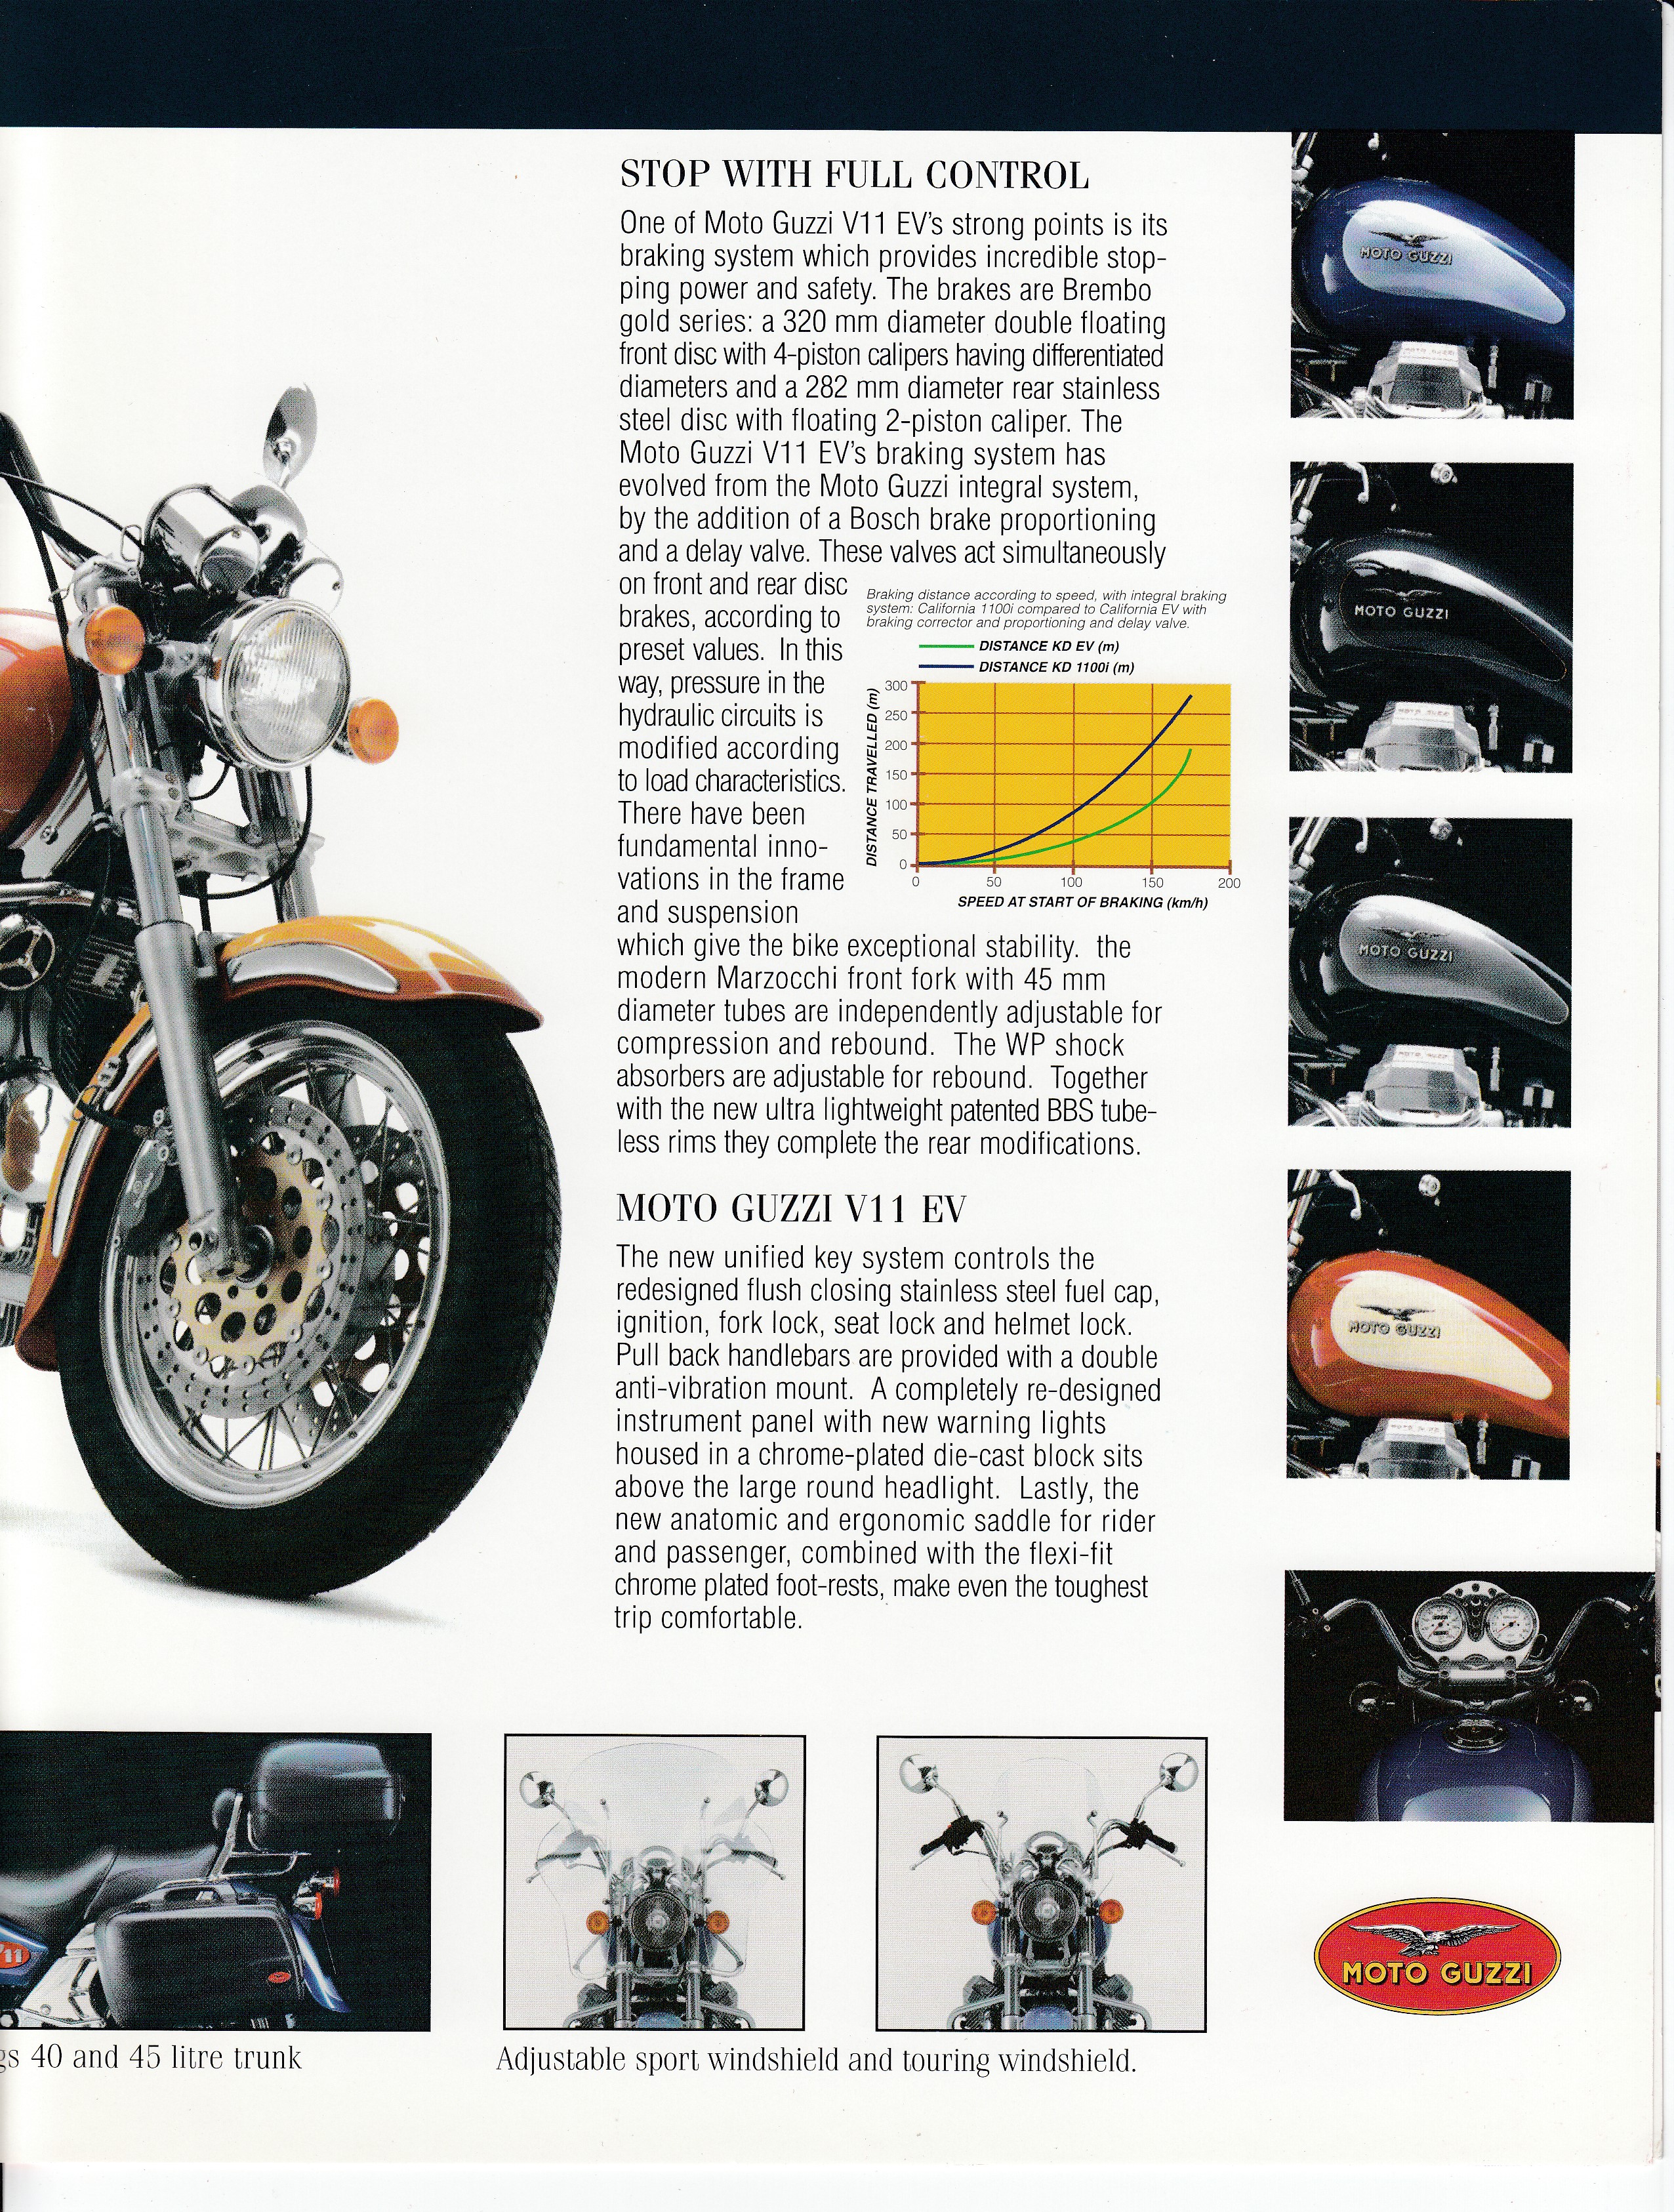 Brochure - Moto Guzzi 1998 V11 EV